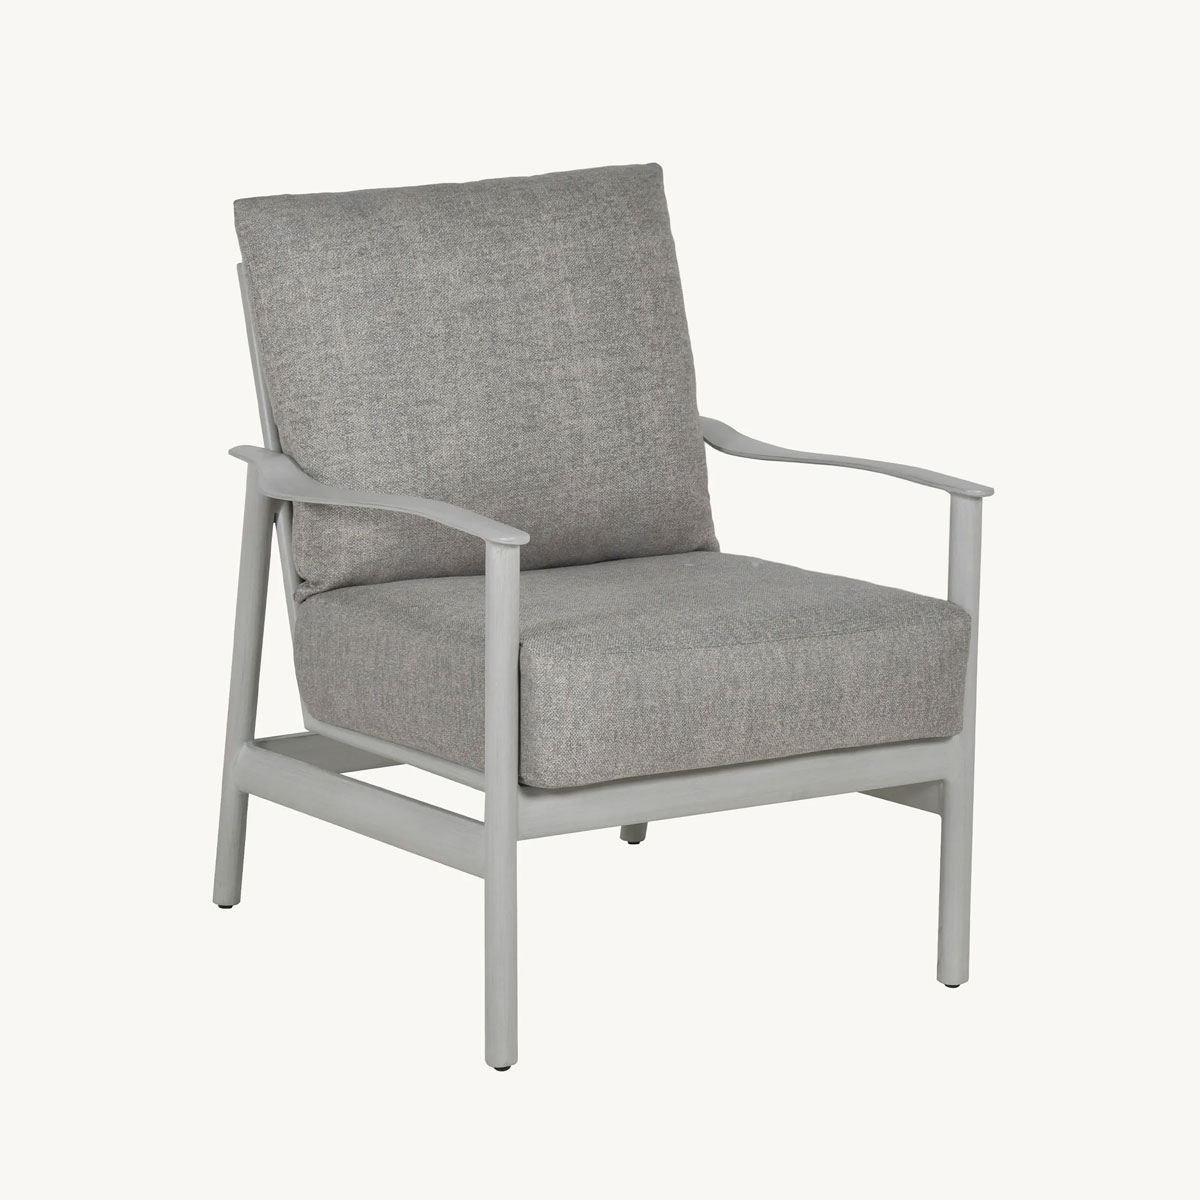 Castelle Barbados Cushion Lounge Chair